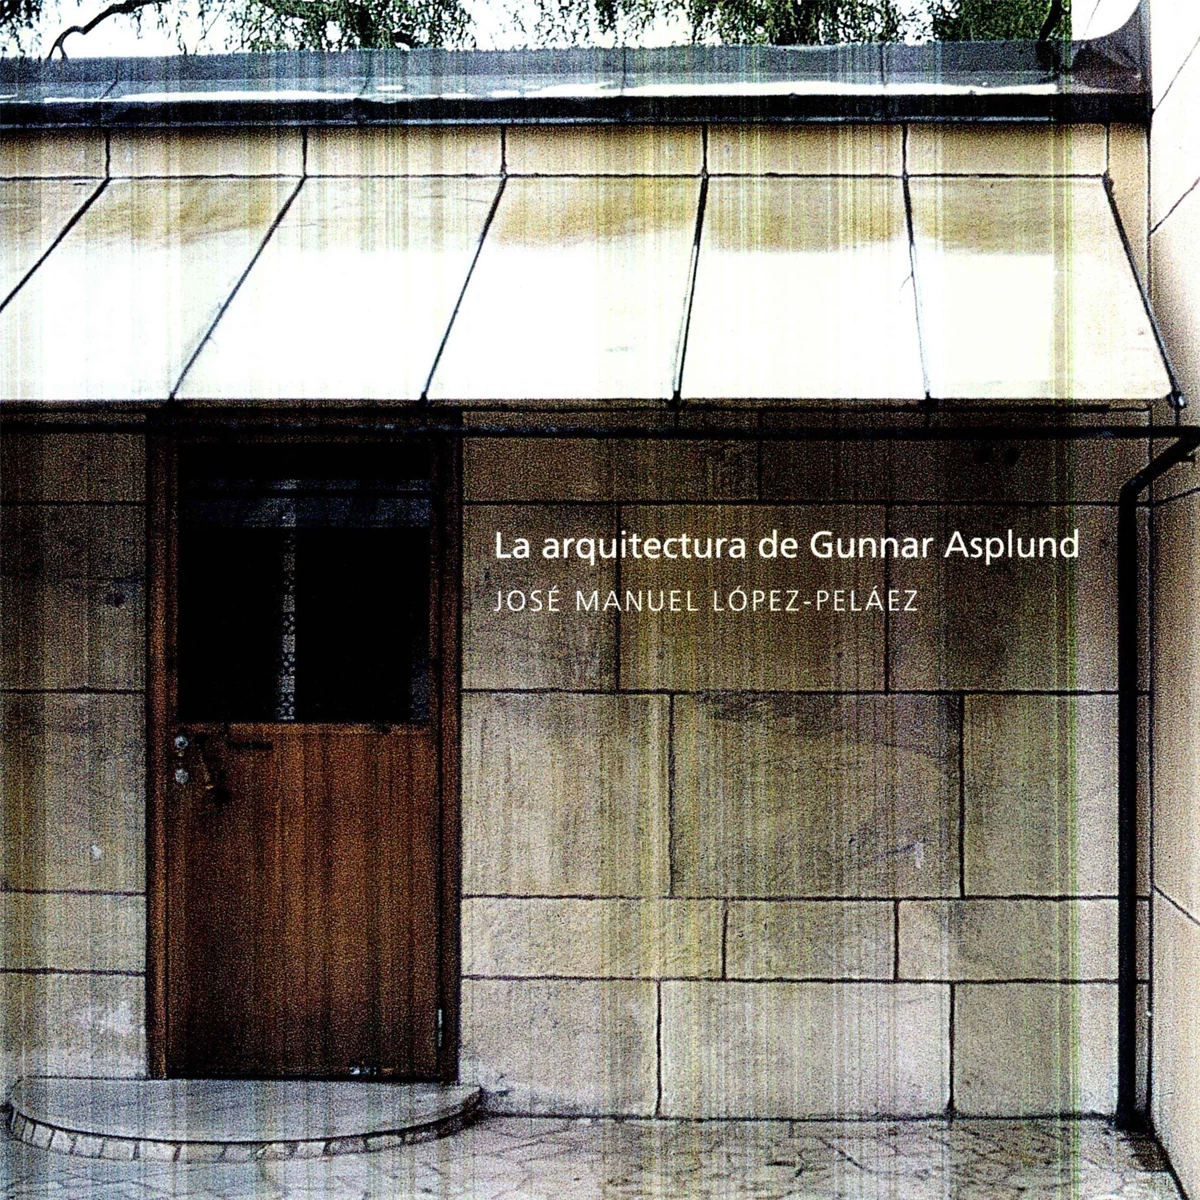 La arquitectura de Gunnar Asplund